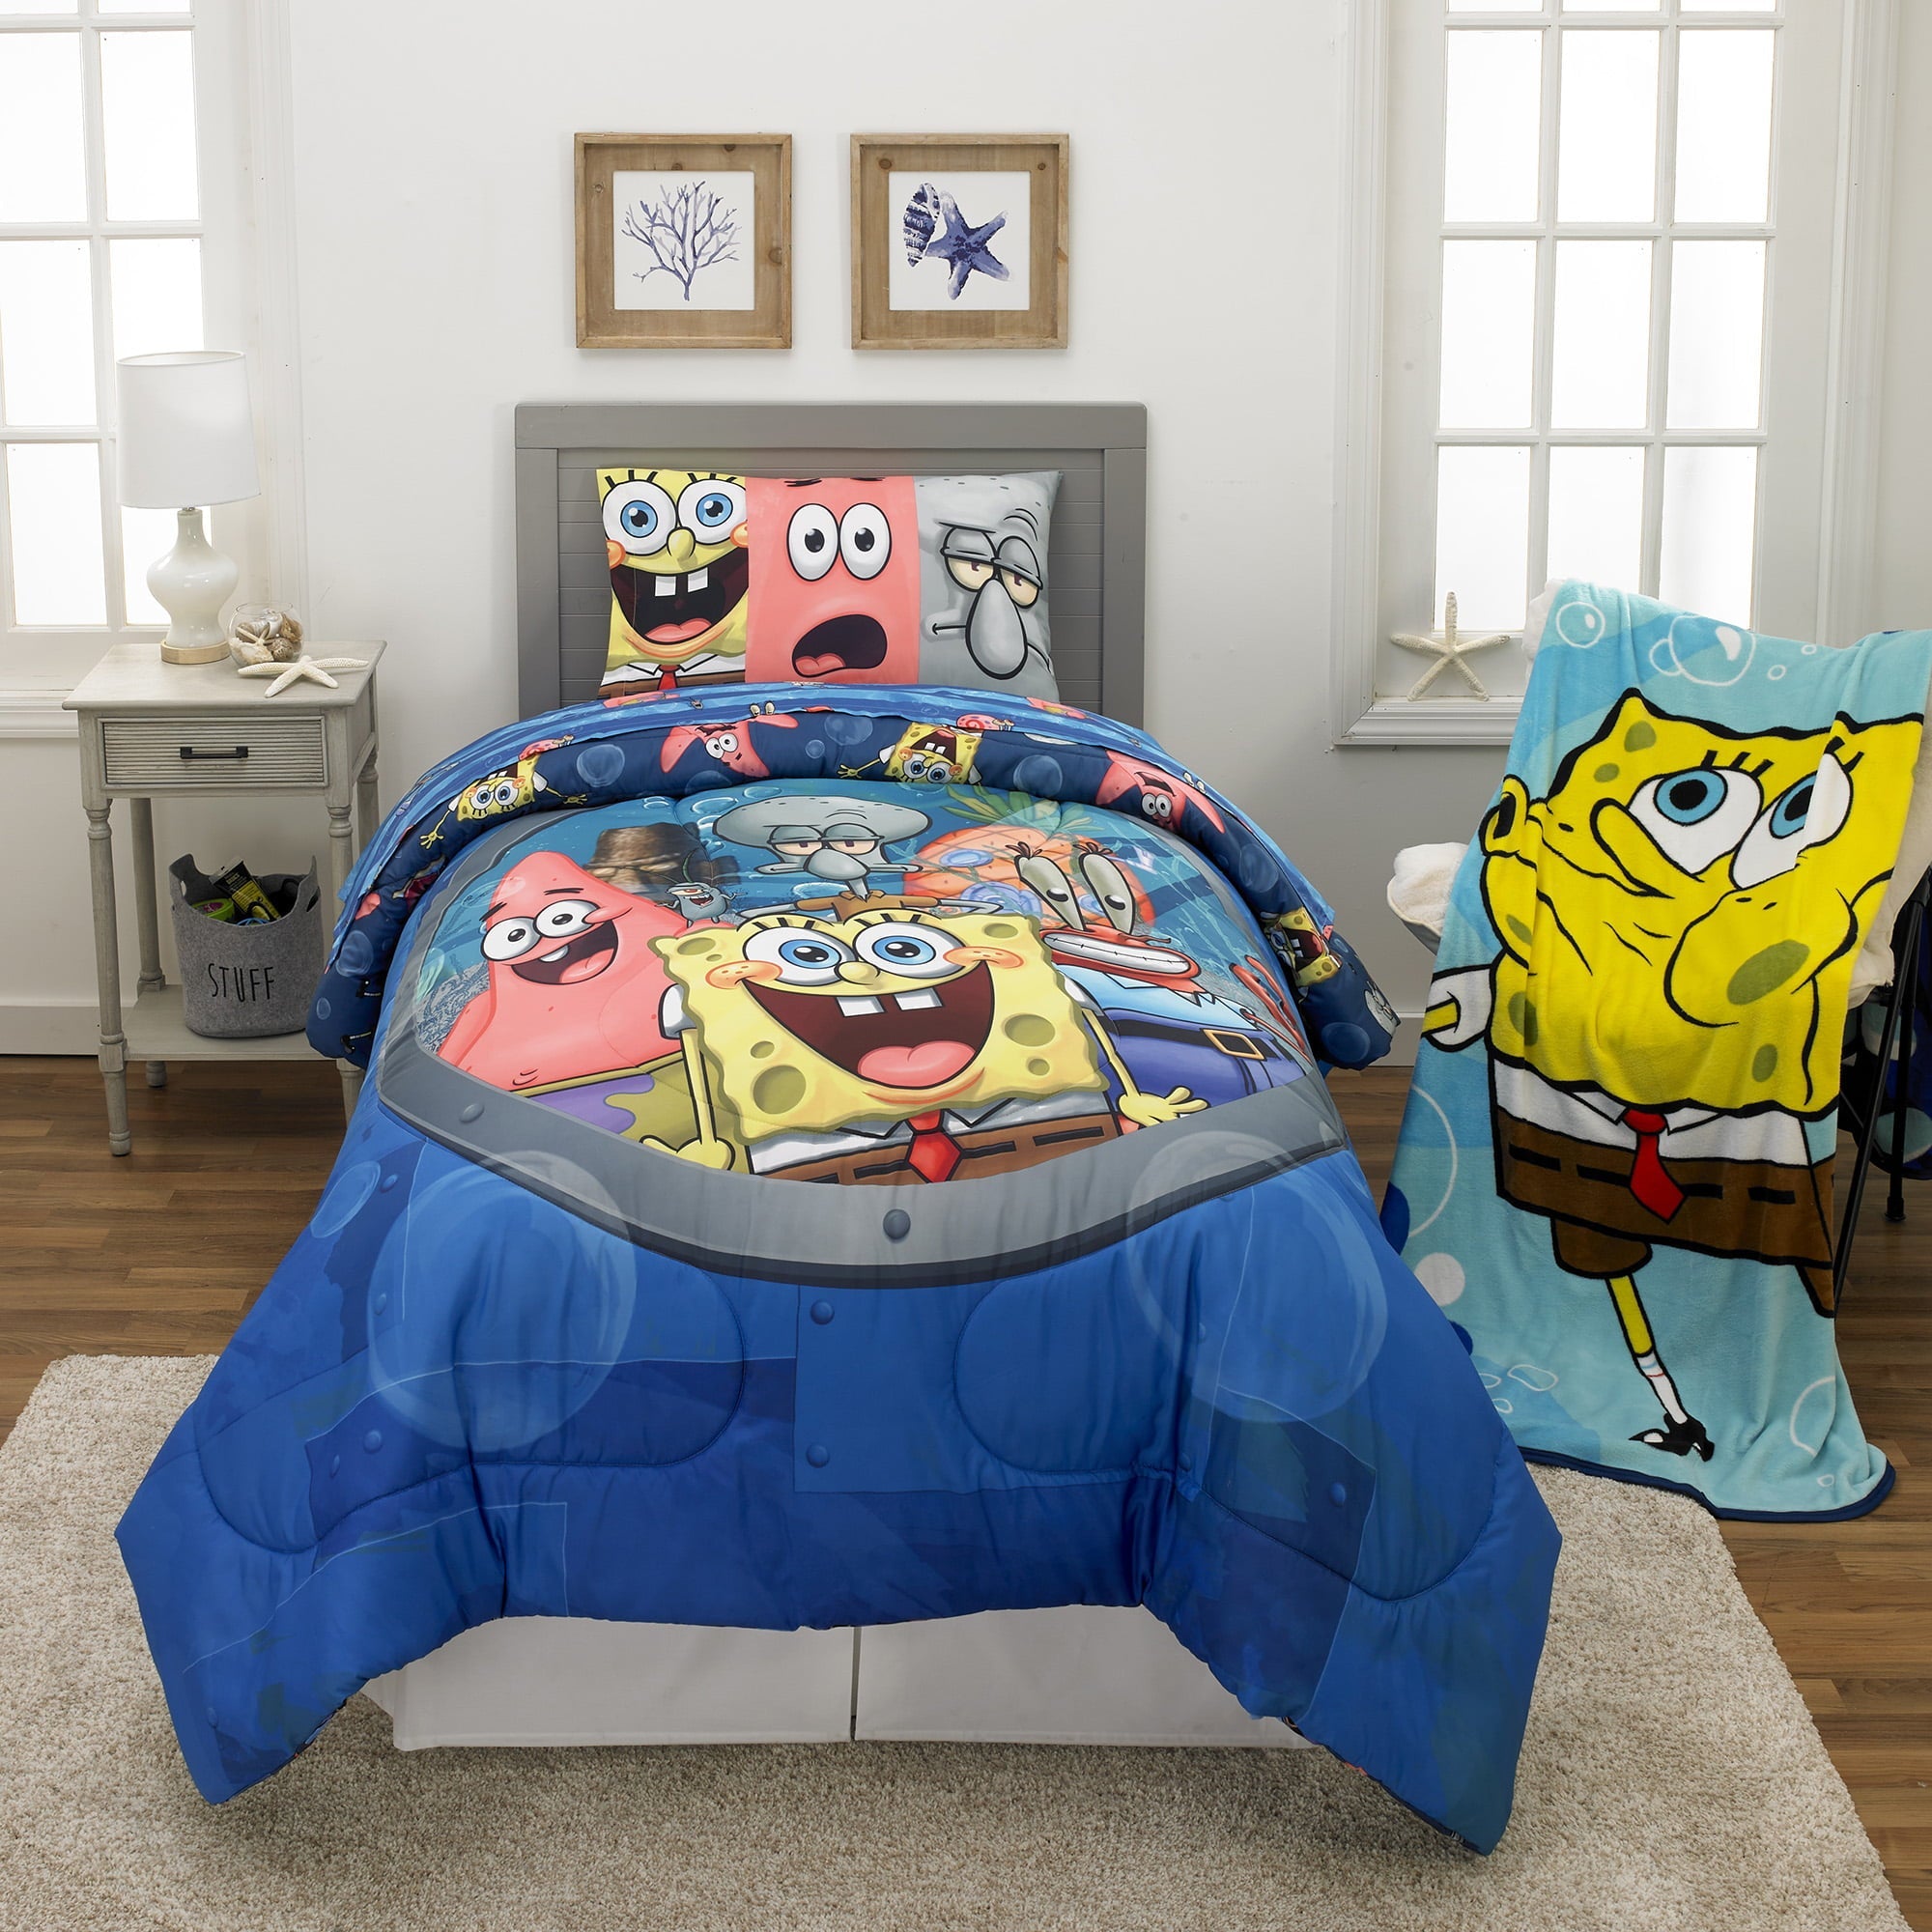 SpongeBob SquarePants Kids Twin Bed in a Bag, Comforter and Sheets, Blue, Nickelodeon